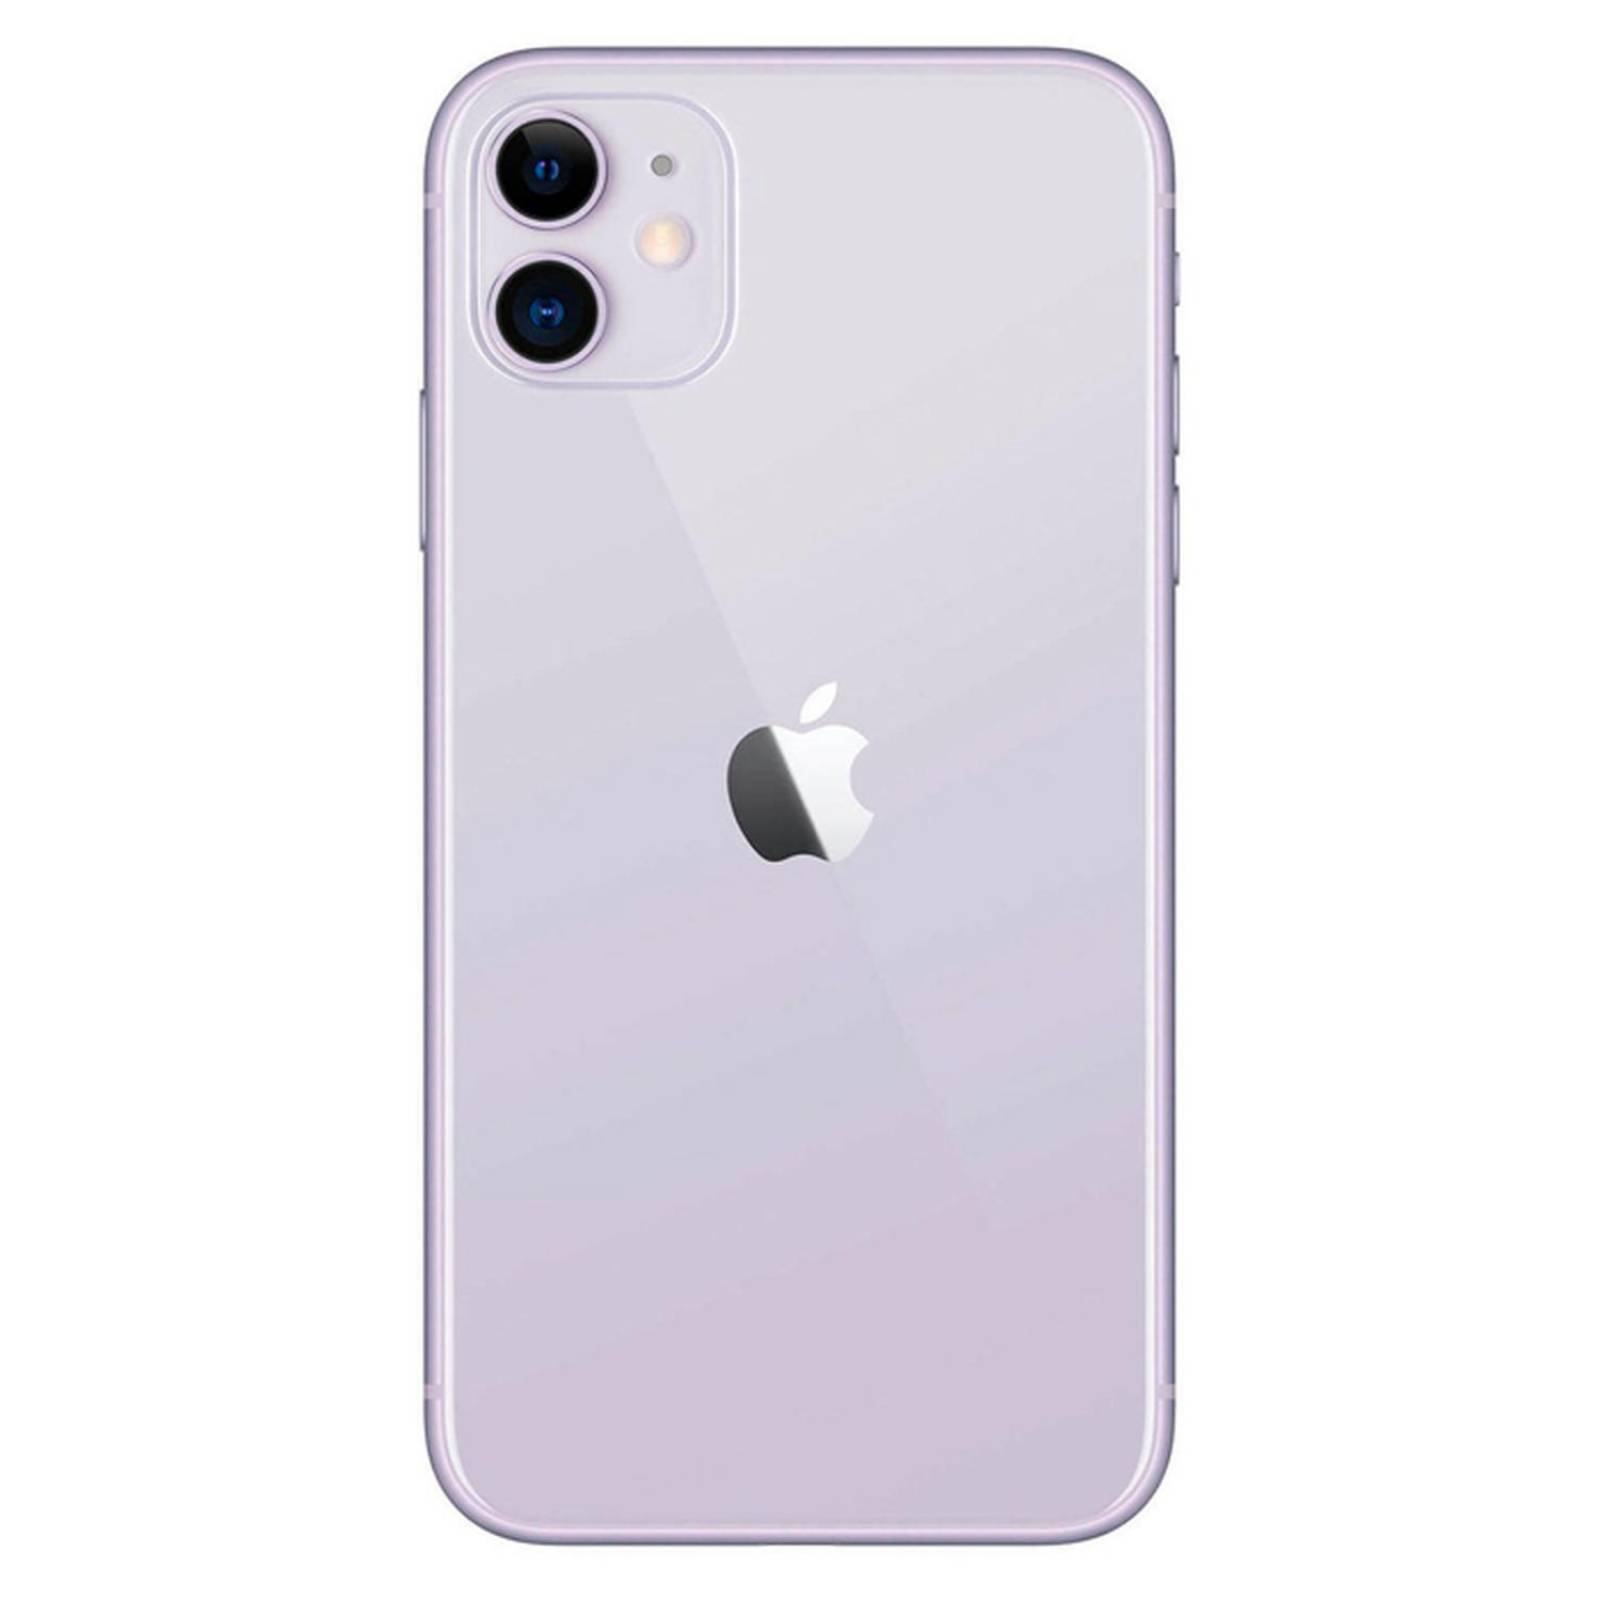 REACONDICIONADO B: APPLE iPhone 11, Blanco, 128 GB, 6.1 Liquid Retina HD,  Chip A13 Bionic, iOS